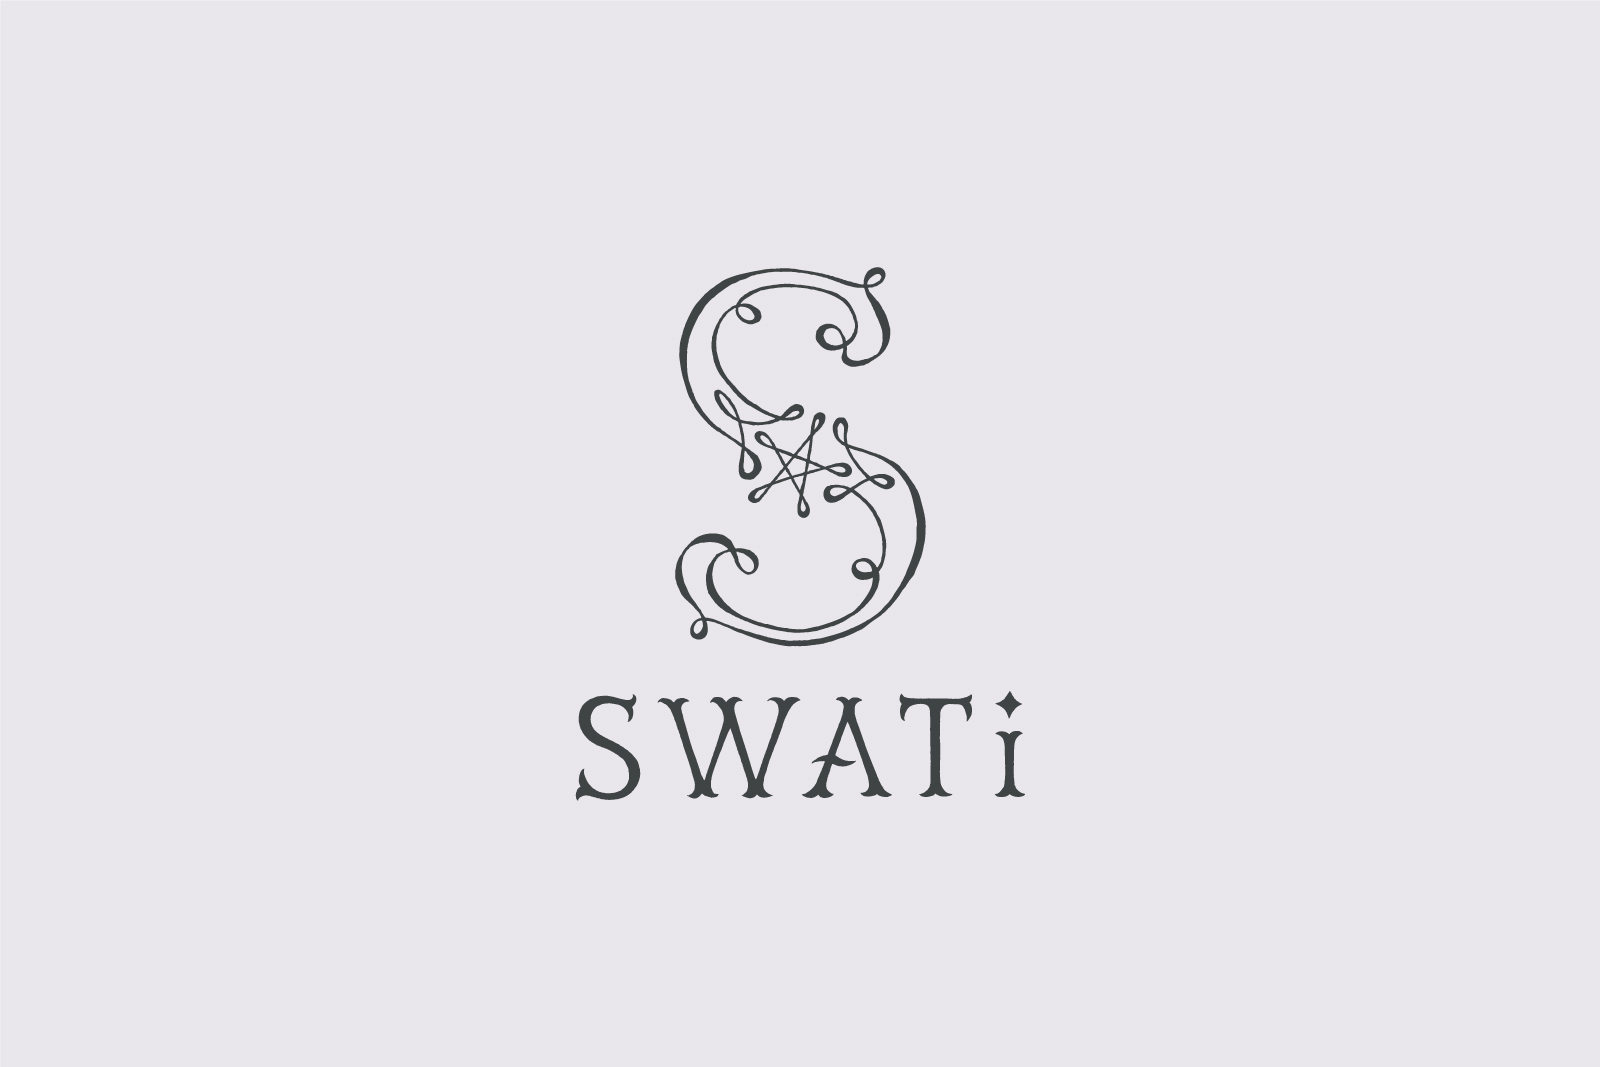 swati_logo_new_1